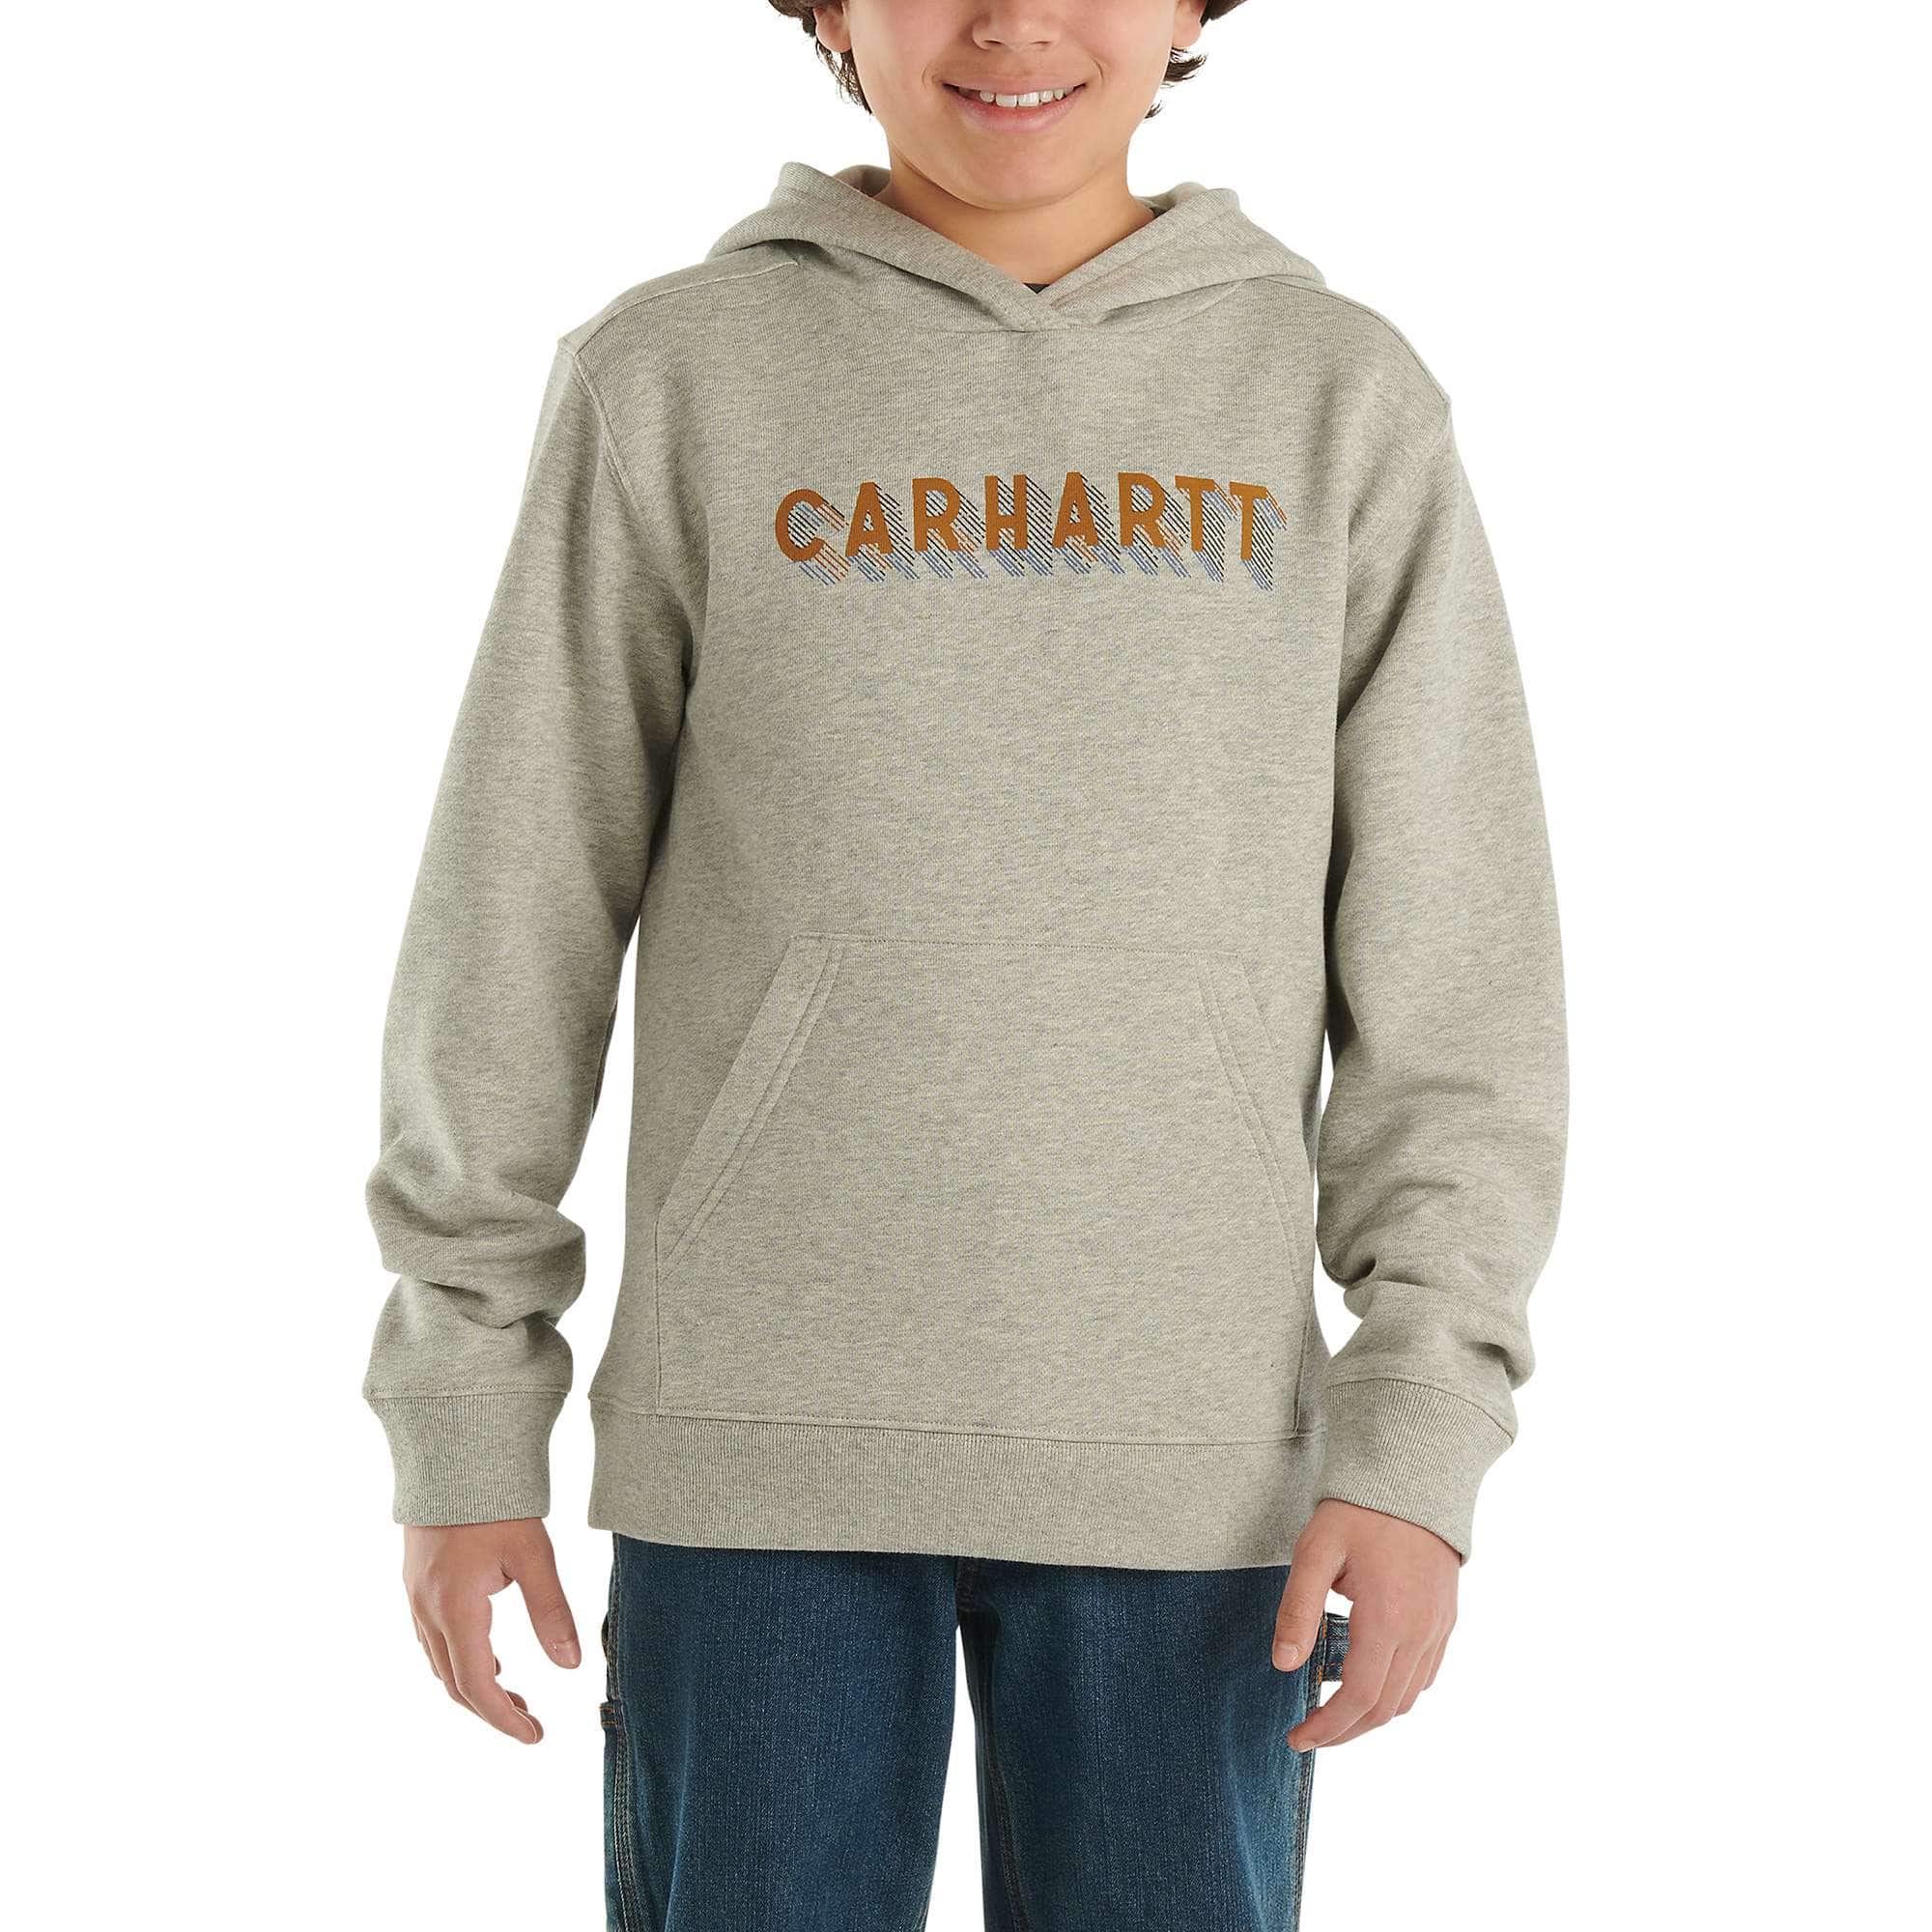 Boys' Long Sleeve Graphic Sweatshirt (Toddler/Child/Youth)